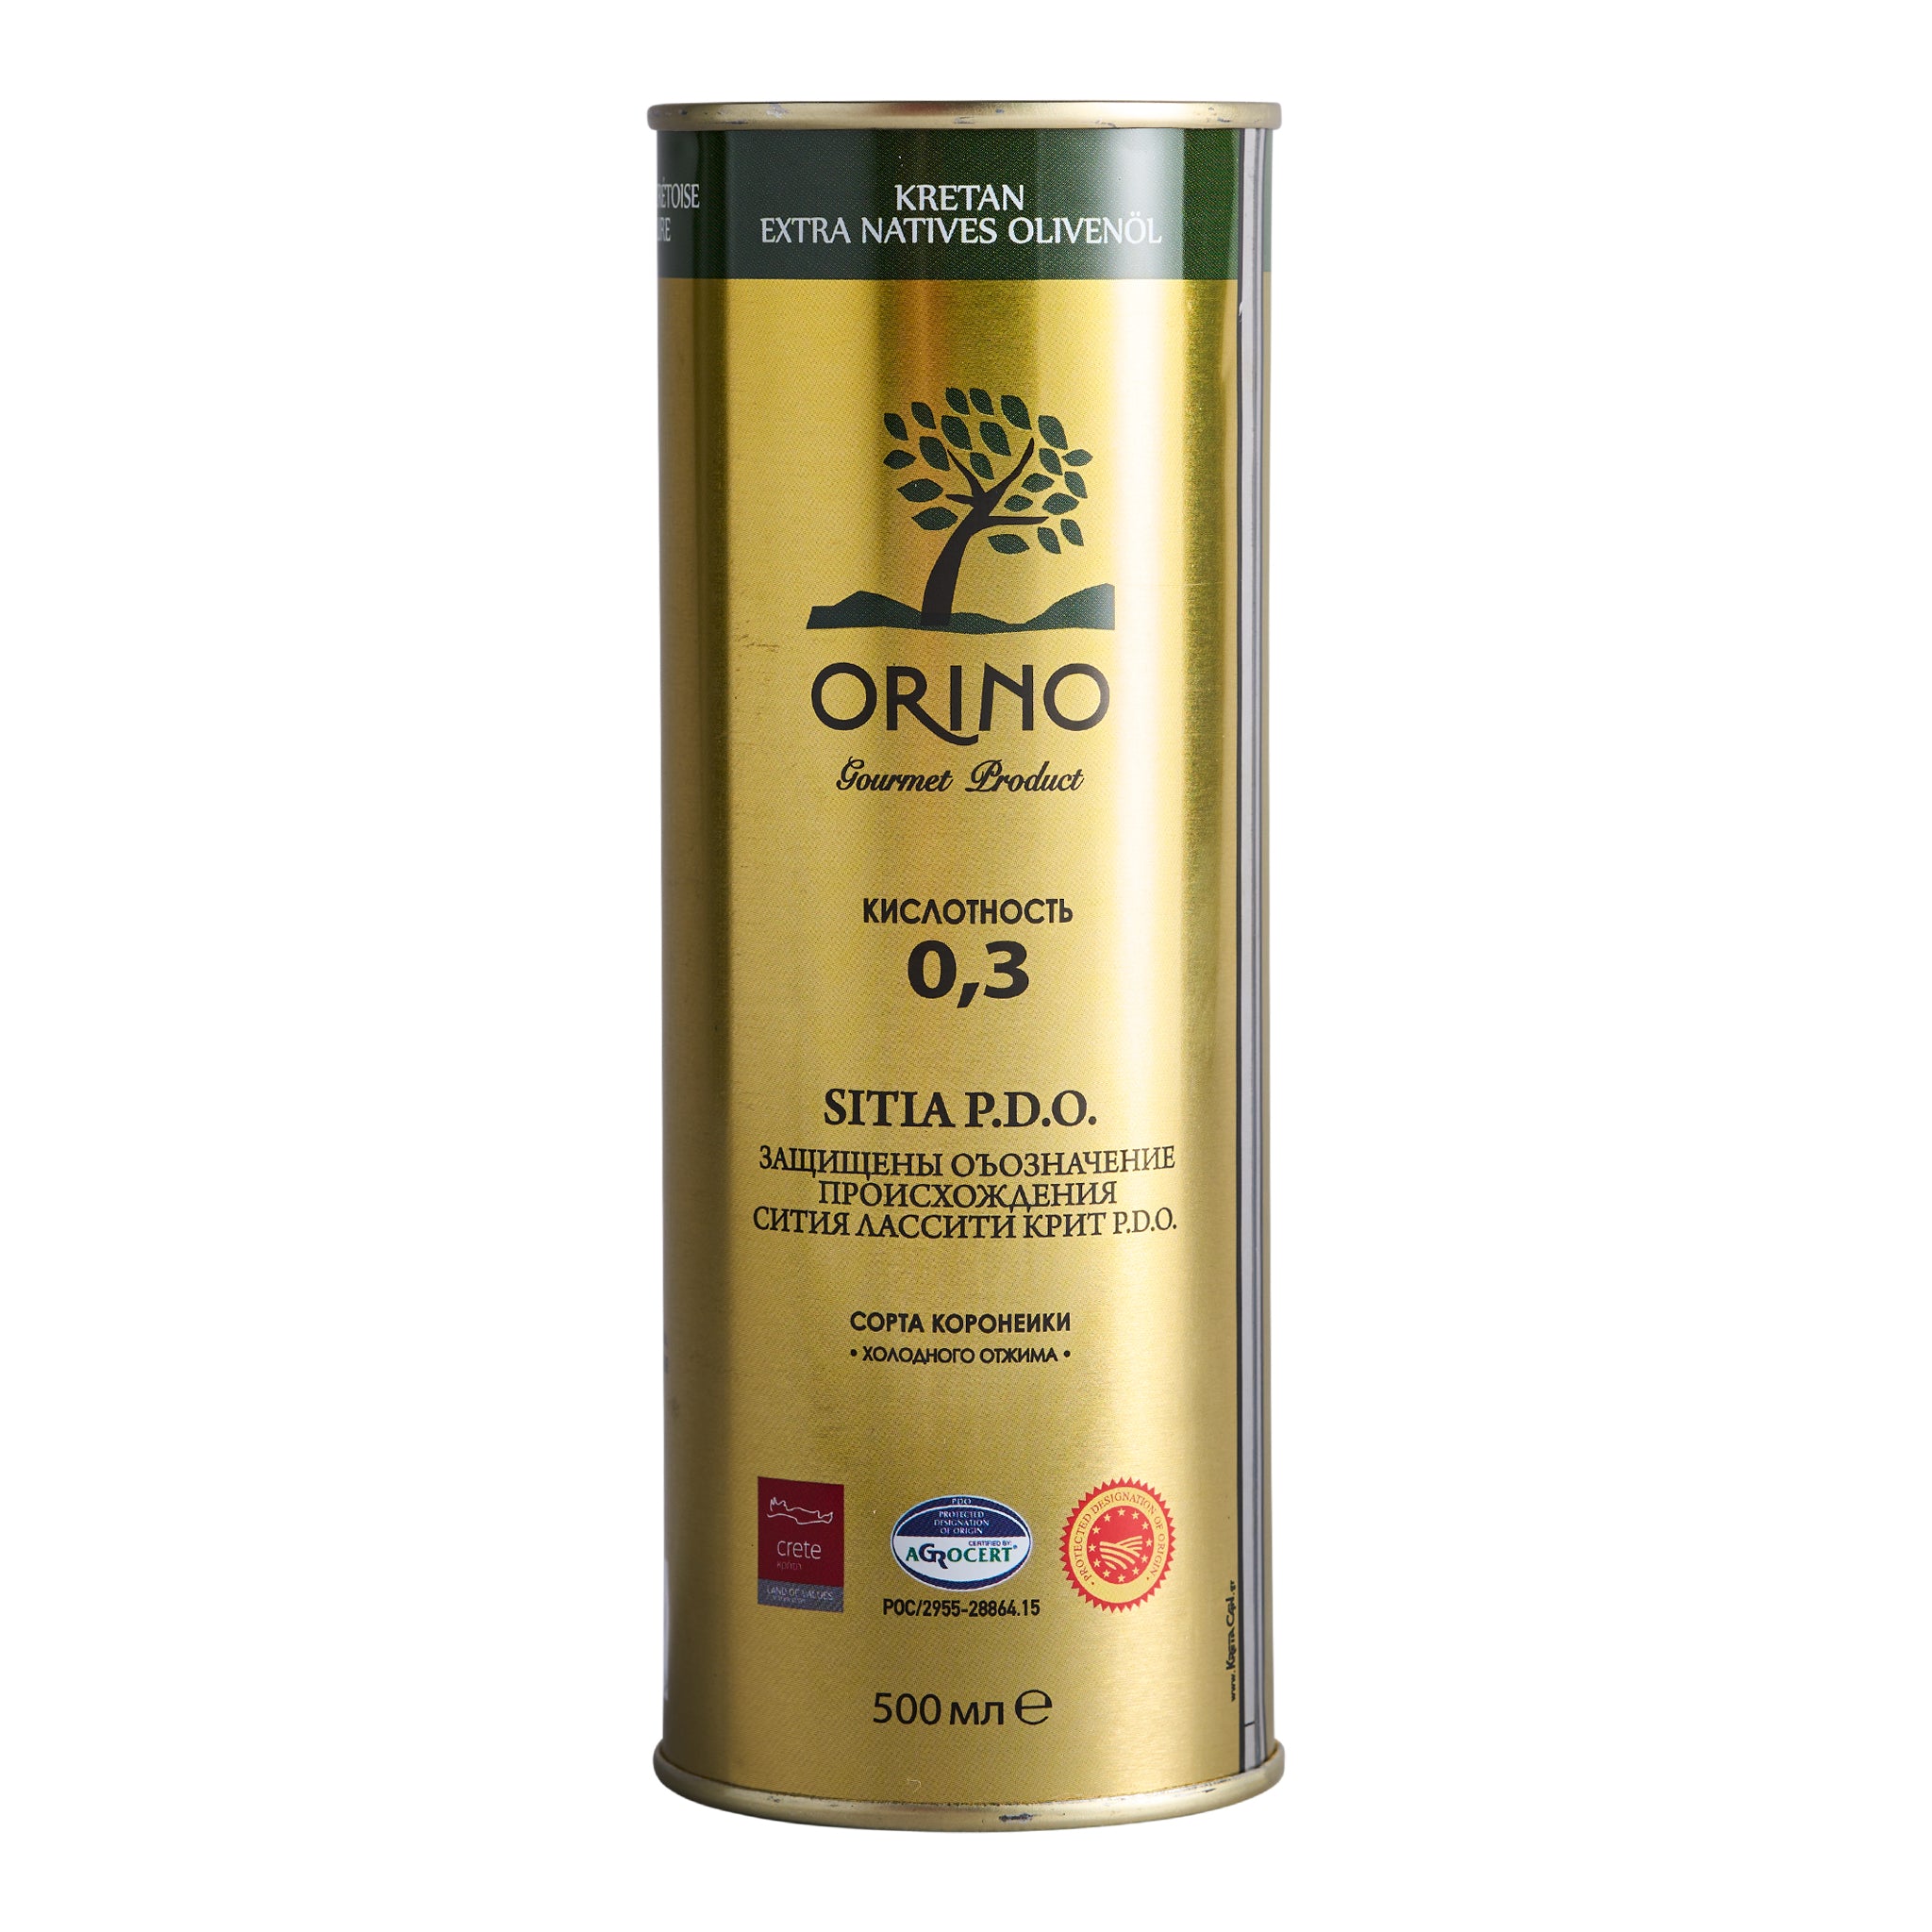 Orino Sitia Extra Natives Olivenöl P.D.O. 0,3% 500ml